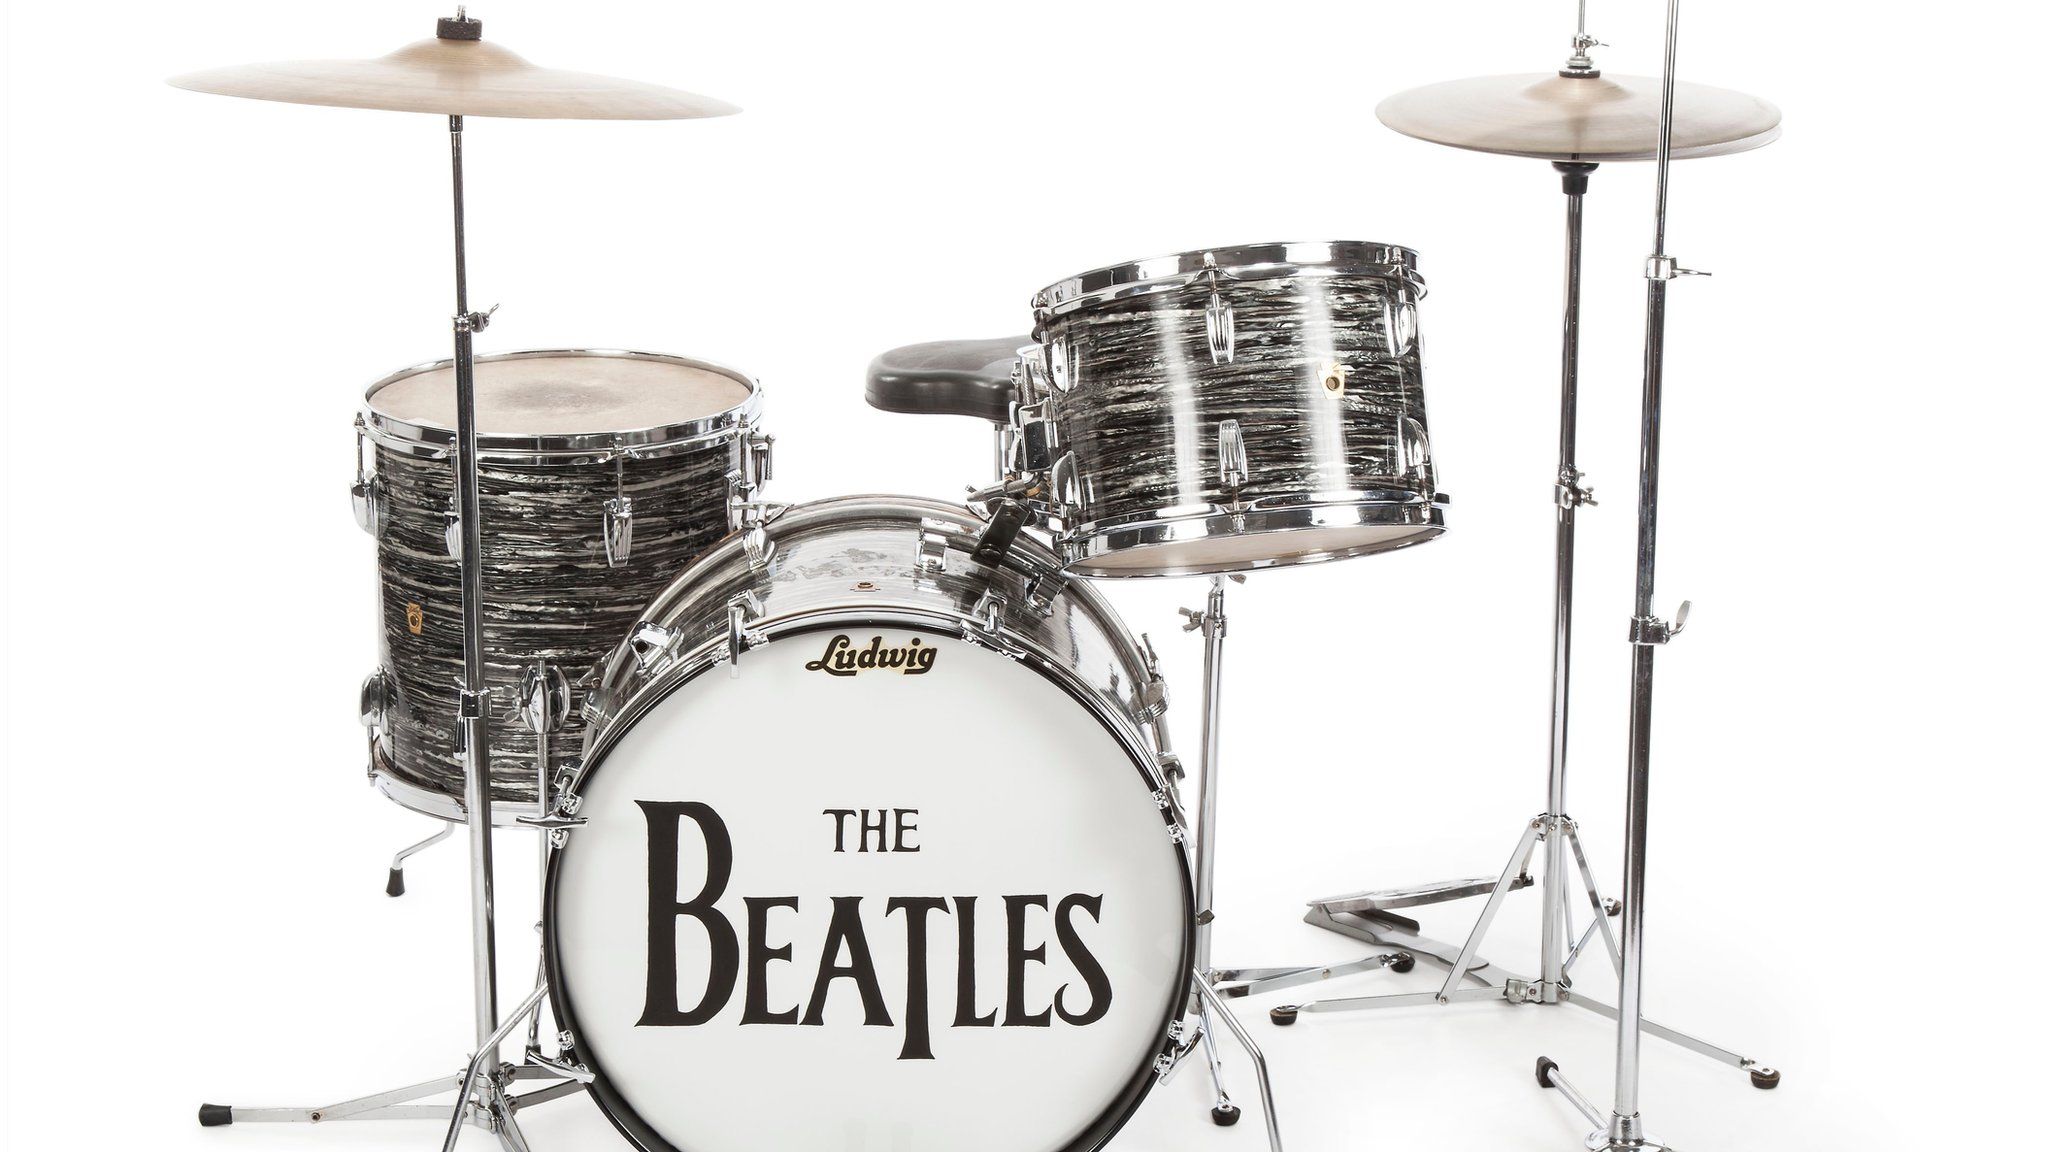 Ringo Starr's Ludwig drum kit